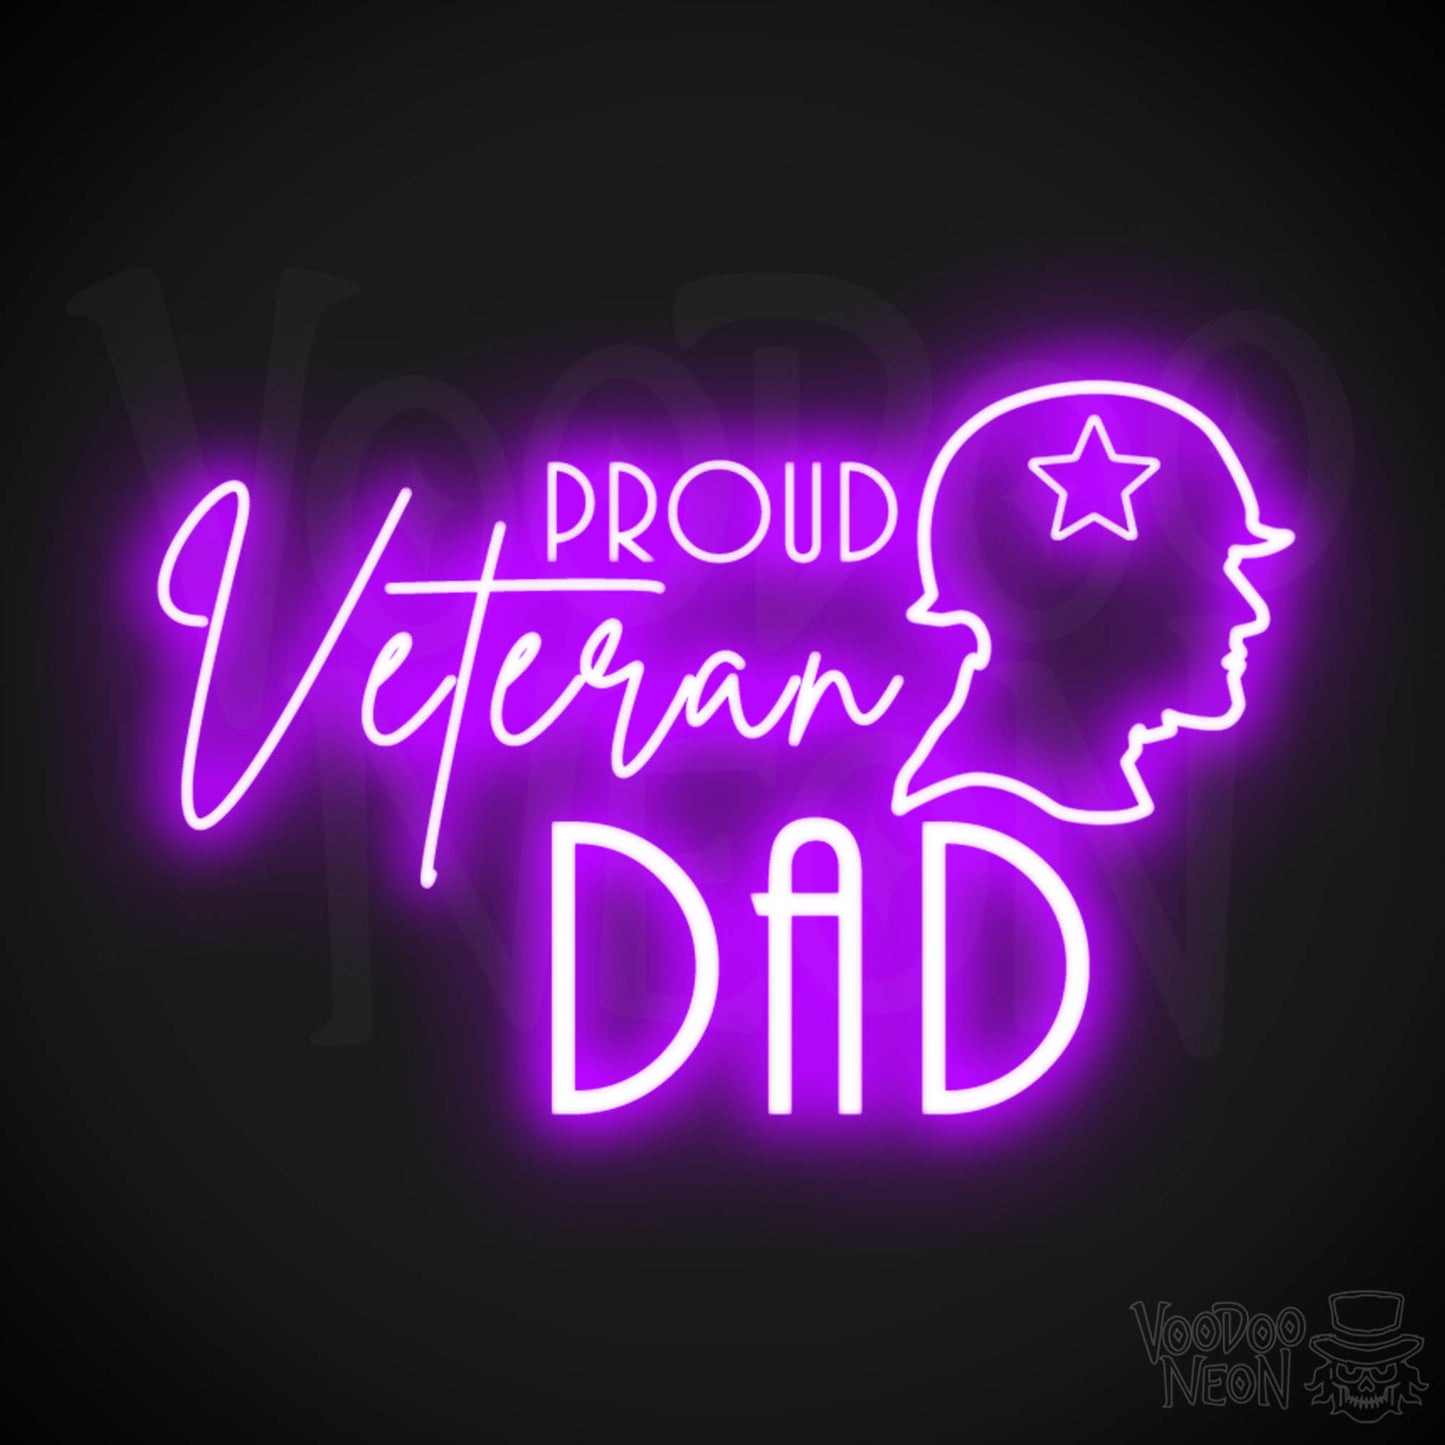 Proud Veteran Dad Neon Sign - Proud Veteran Dad Sign - Neon Veteran Wall Art - Color Purple